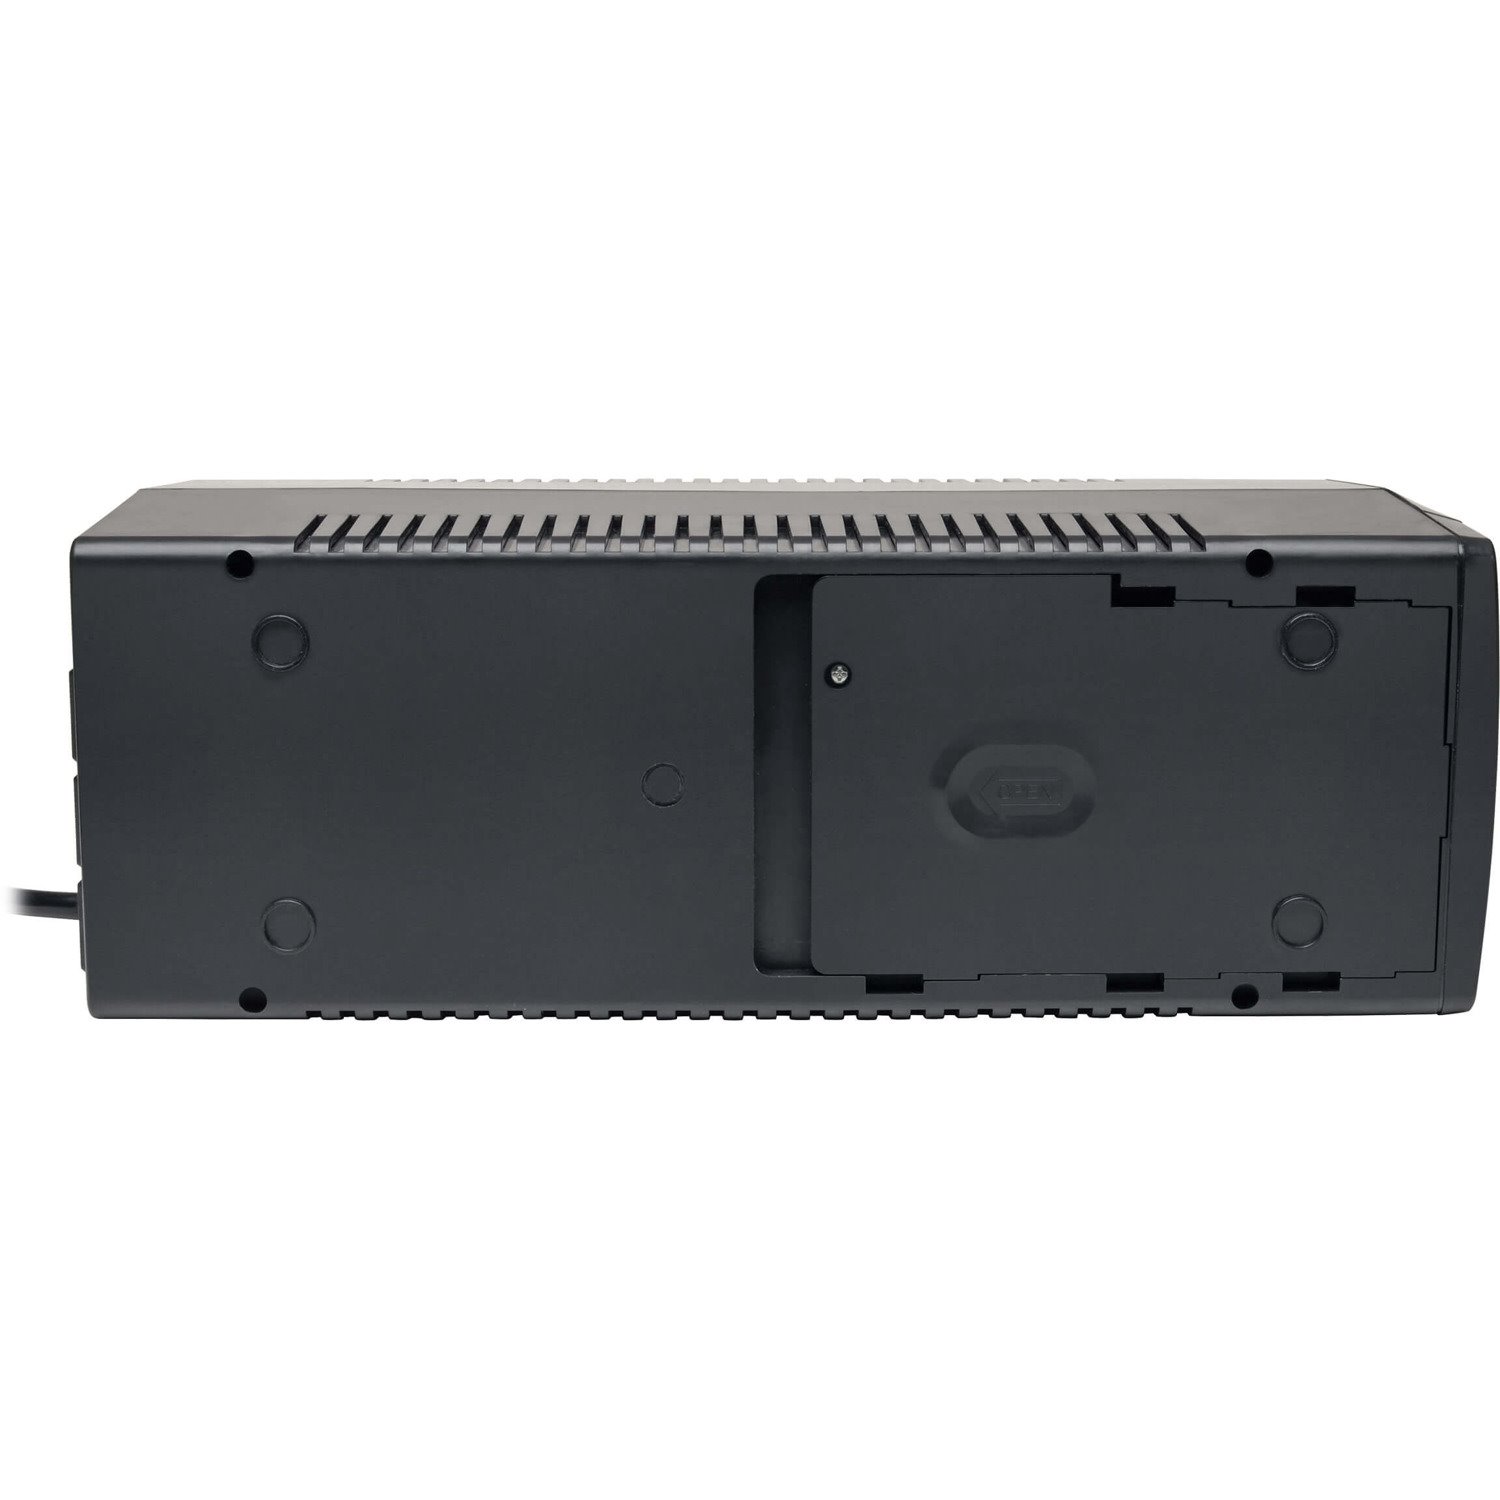 Tripp Lite by Eaton 800VA 475W Line-Interactive UPS - 8 NEMA 5-15R Outlets, AVR, 120V, 50/60 Hz, USB, LCD, Tower - Battery Backup